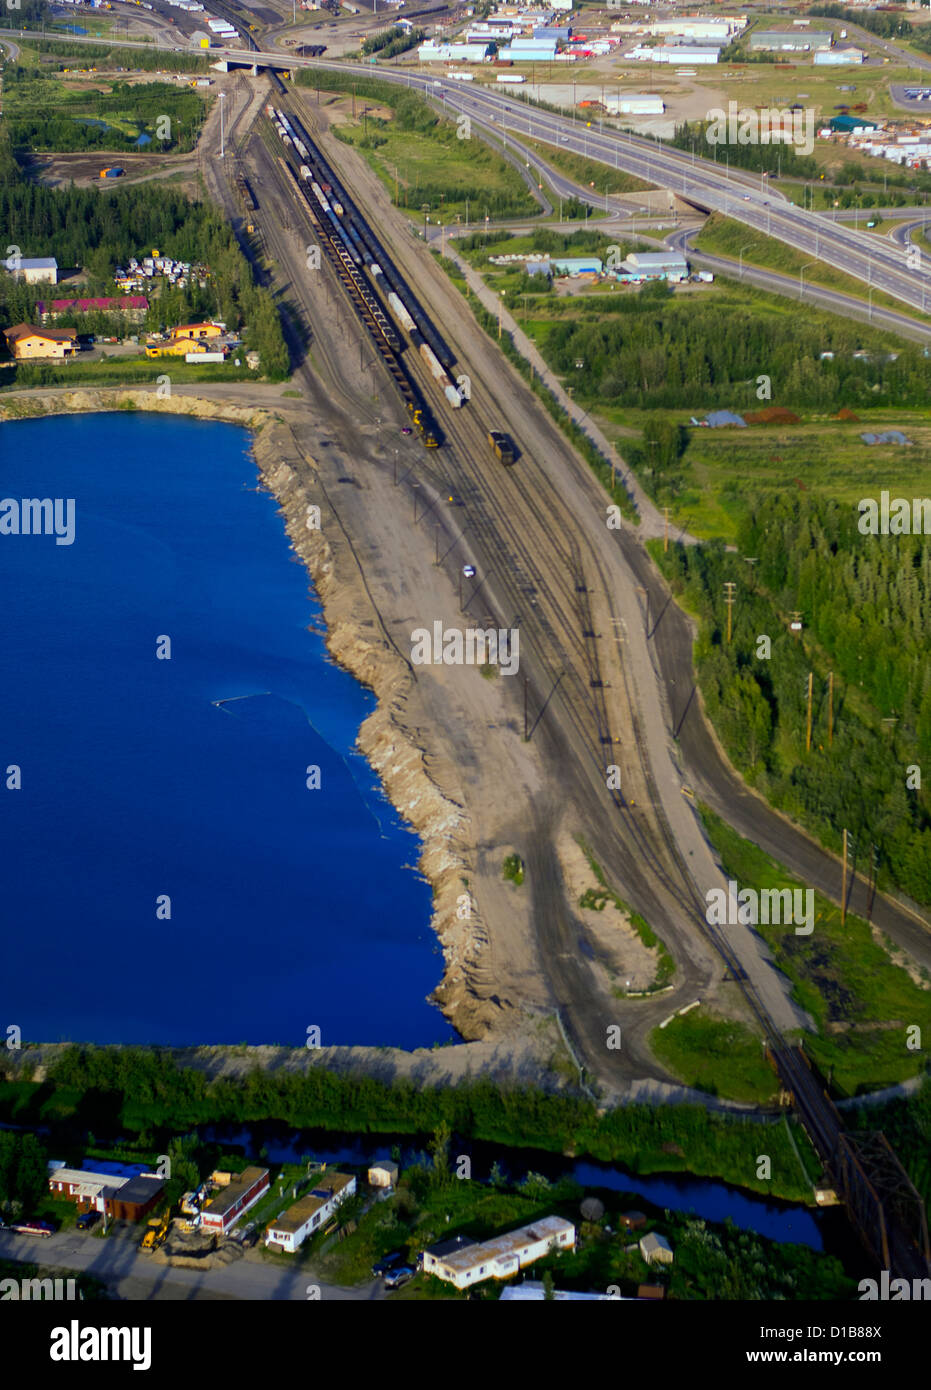 Alaska Railroad train yard Fairbanks an aerial photograph Stock Photo